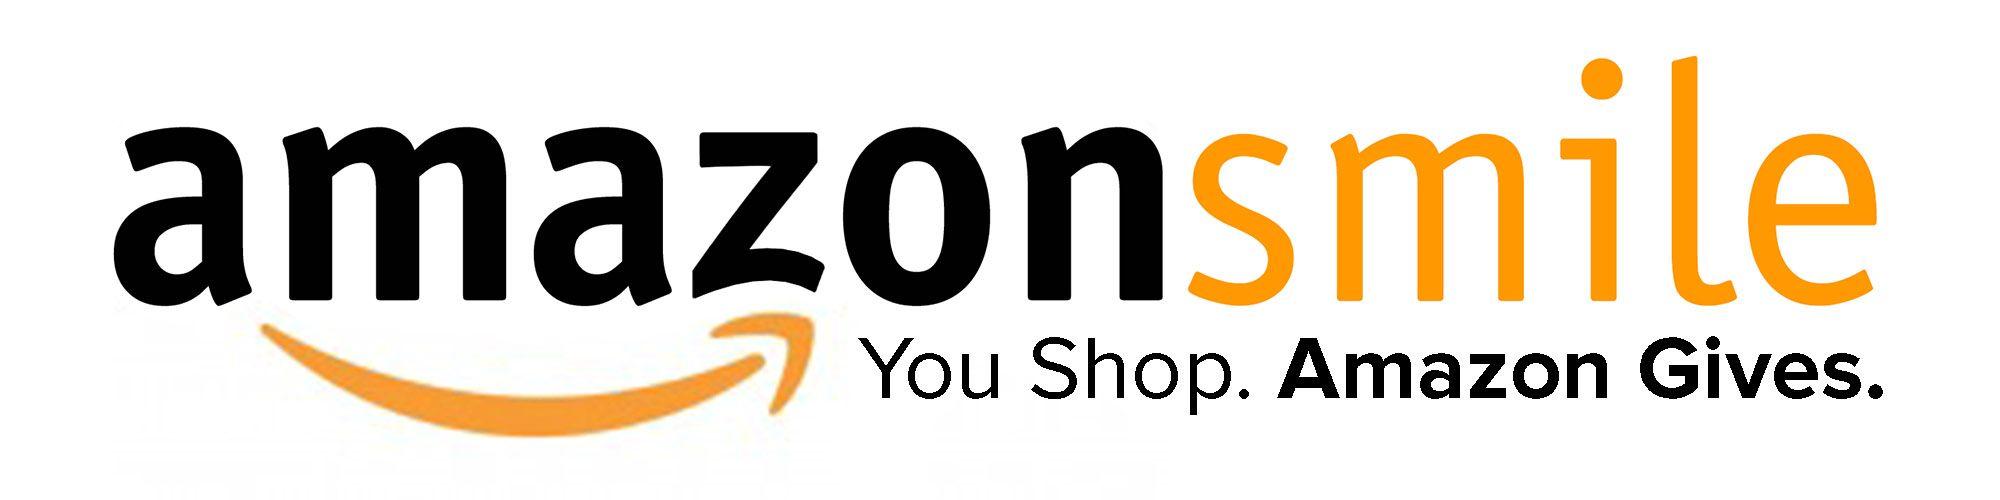 Amazon Shopping Logo - Other Ways to Help - Tails Humane Society